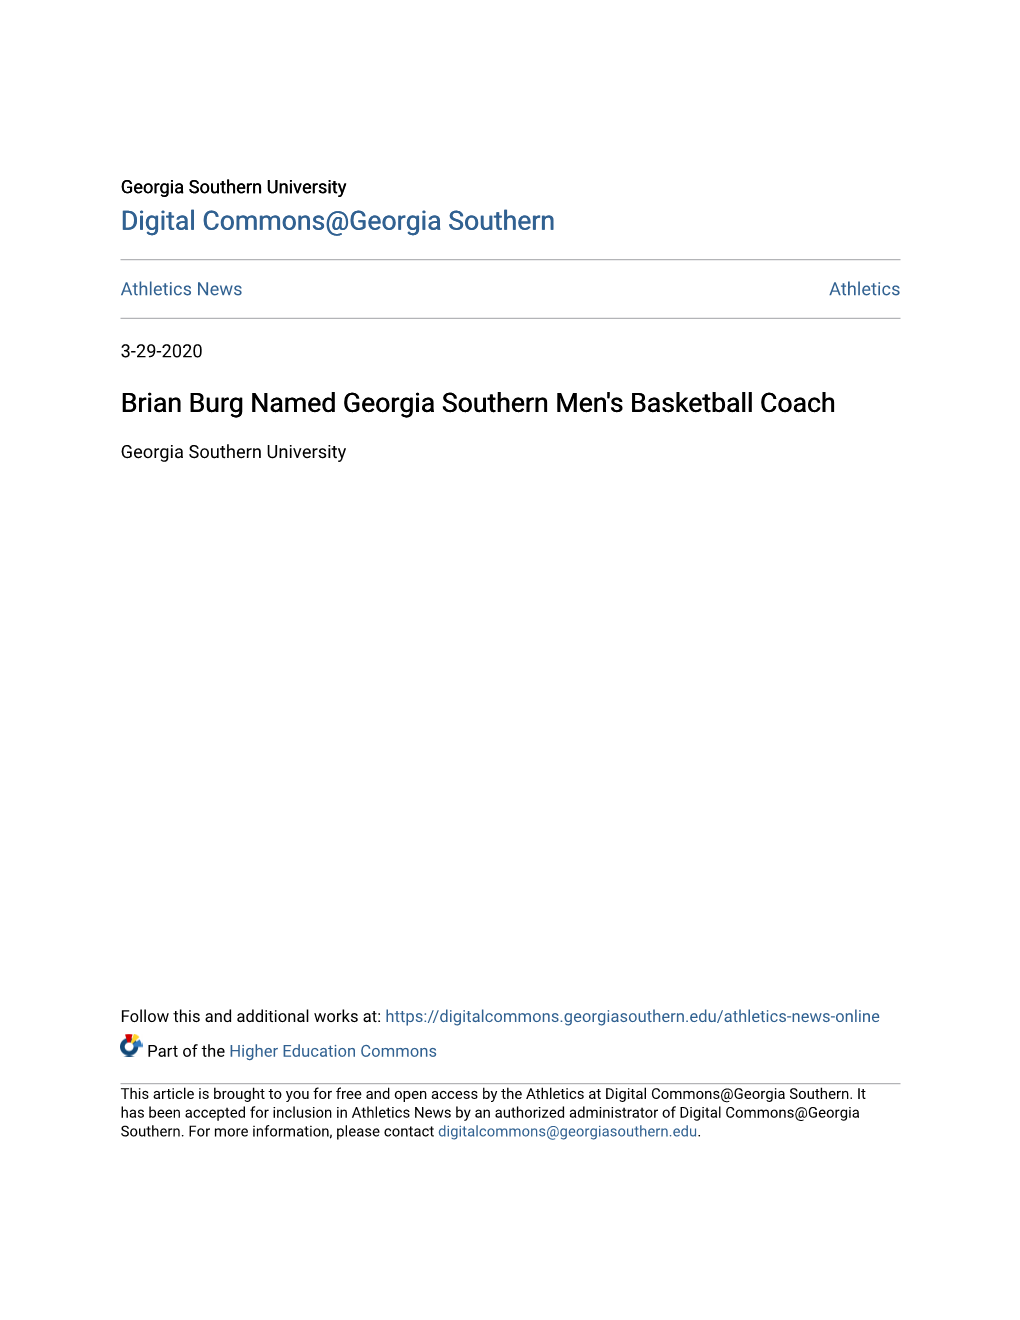 Brian Burg Named Georgia Southern Men's Basketball Coach